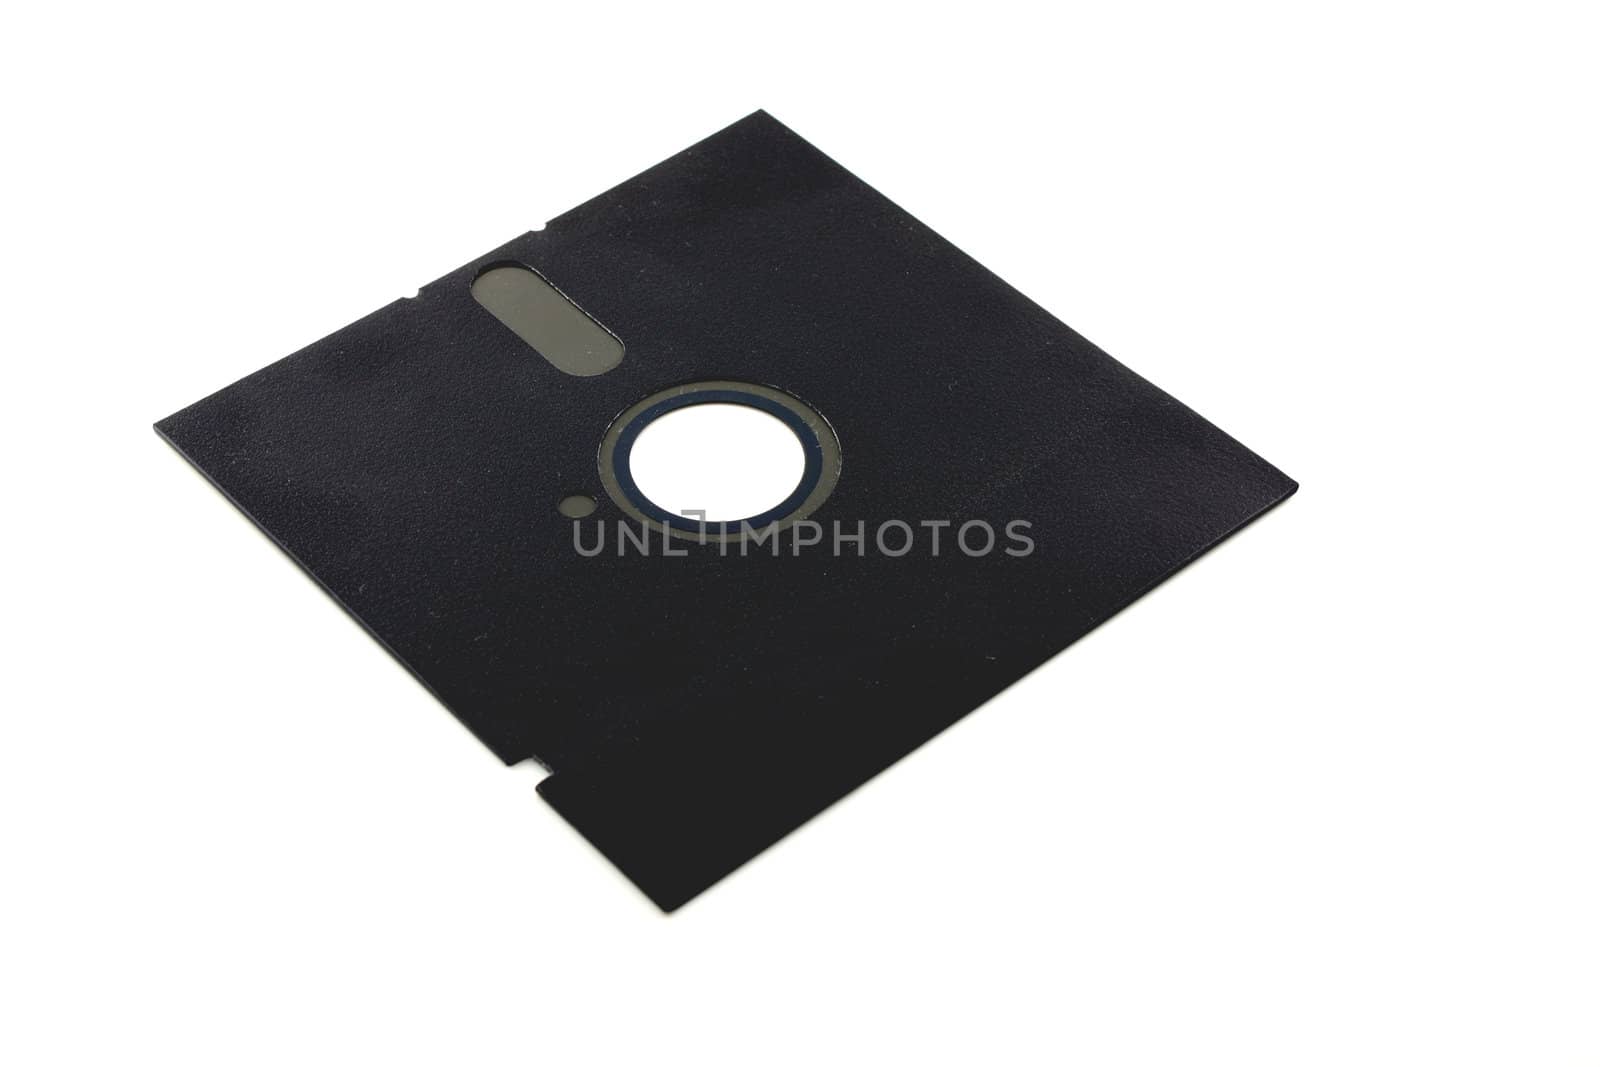 Old floppy disk by sergpet